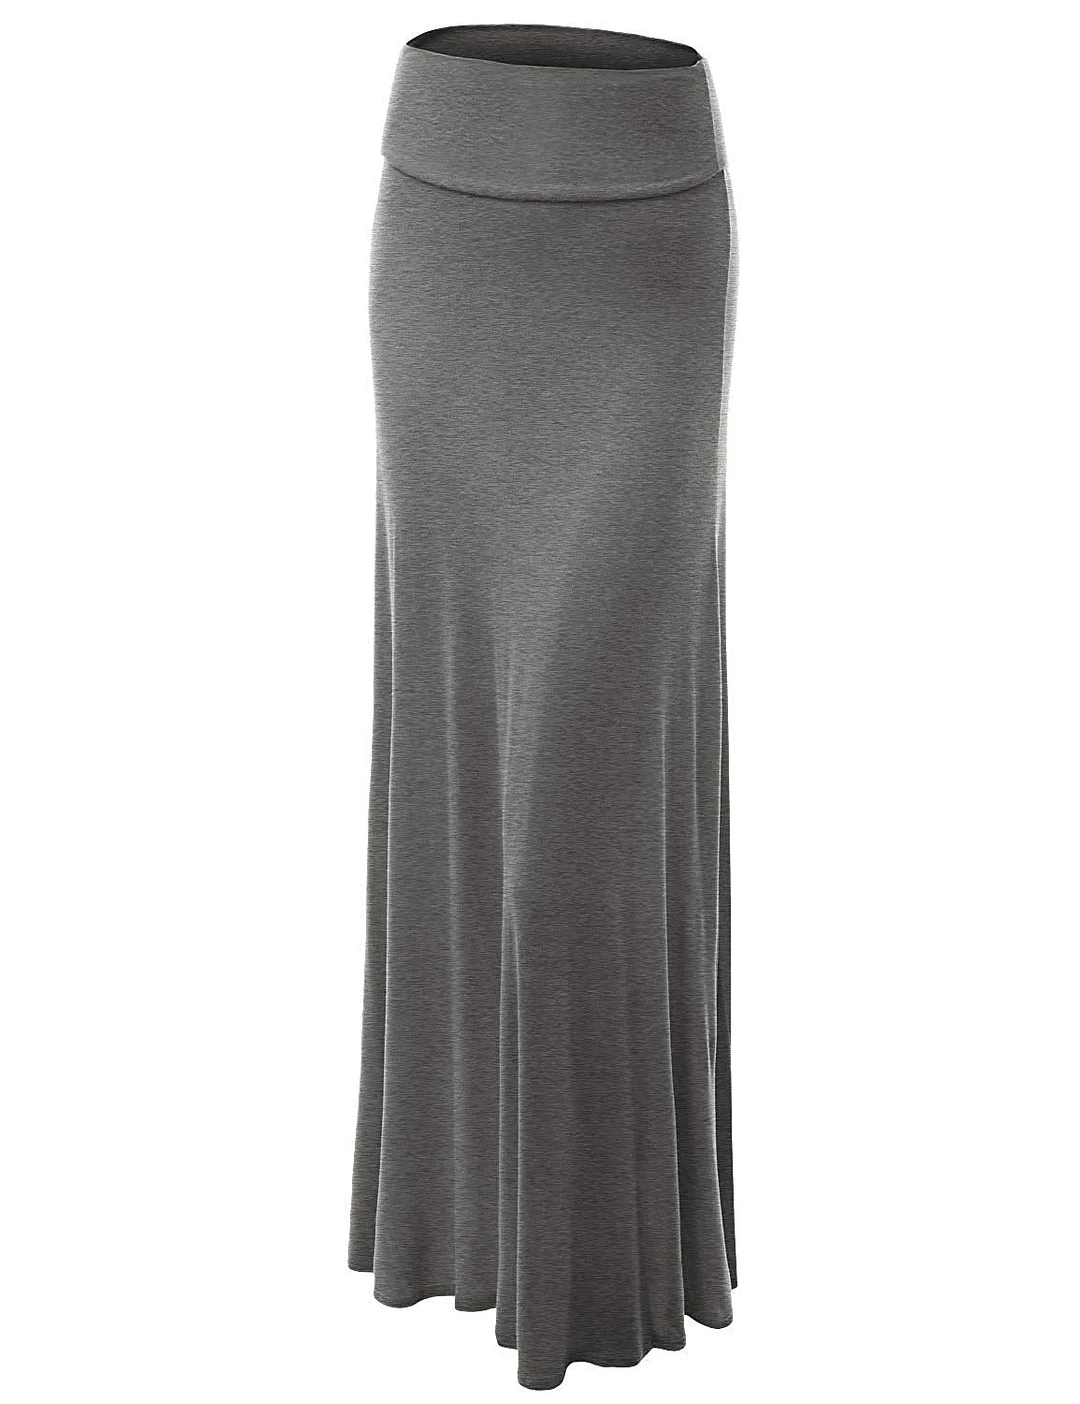 Women's Basic Solid Tie Dye Foldable High Waist Floor Length Maxi Skirt S-3XL Plus Size